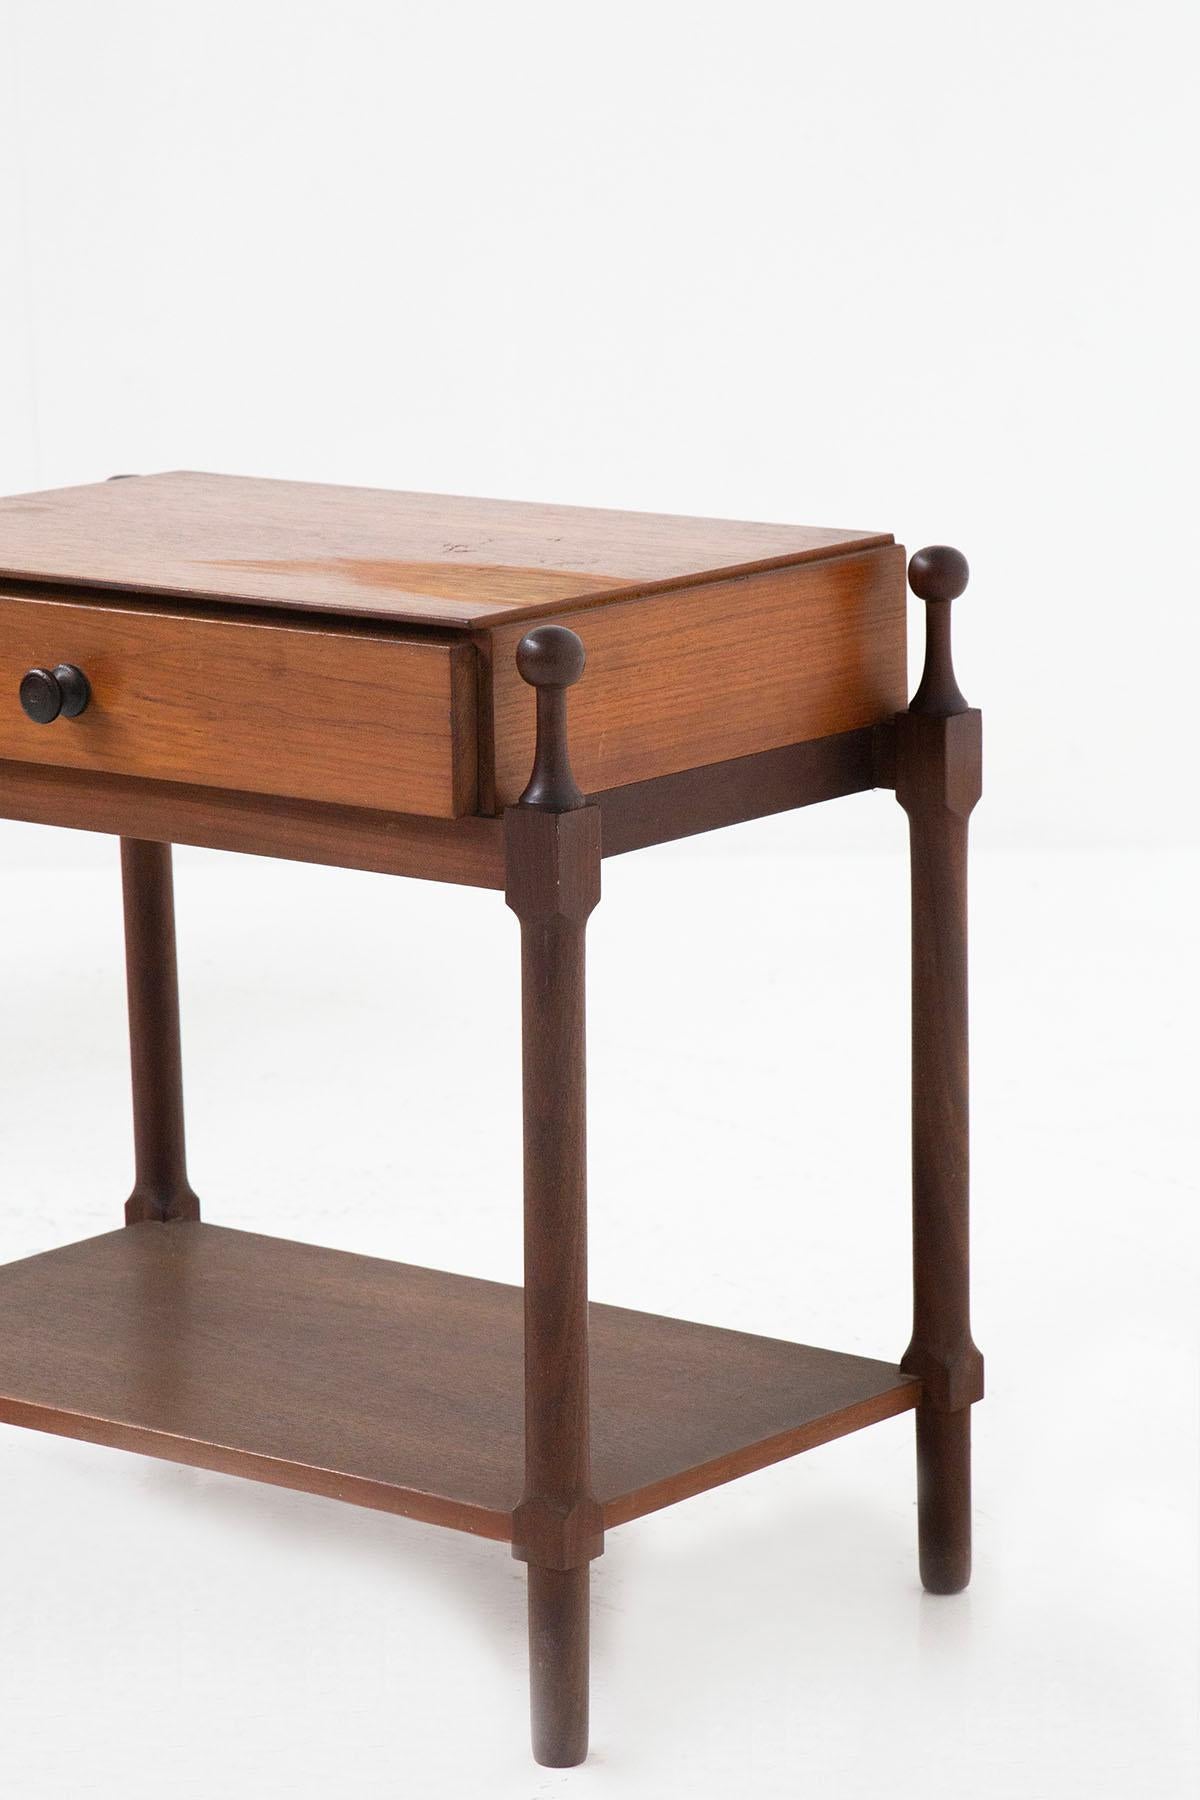 Mid-20th Century Italian Midcentury Wooden Side Tables